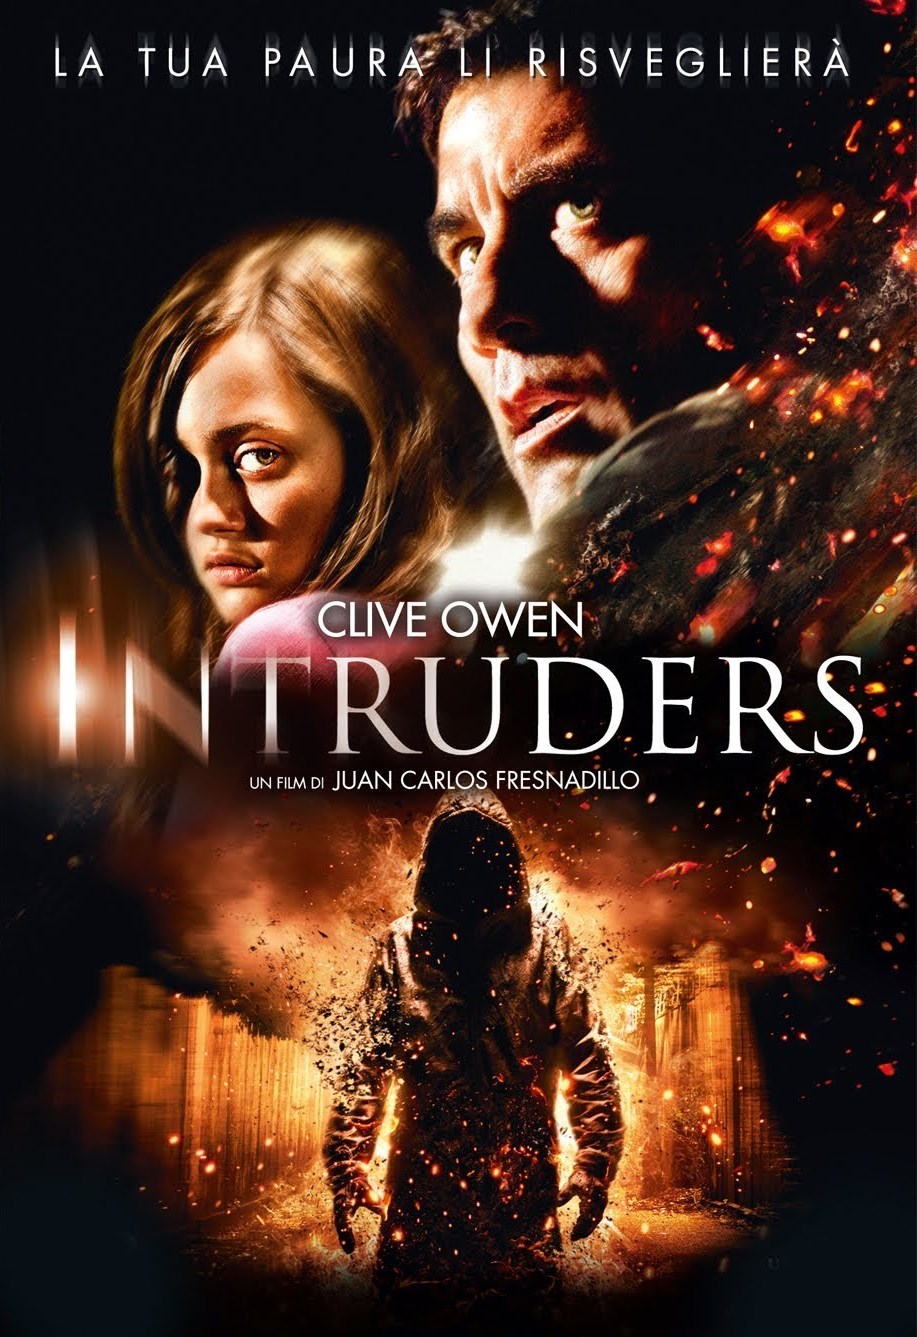 Intruders [HD] (2012)